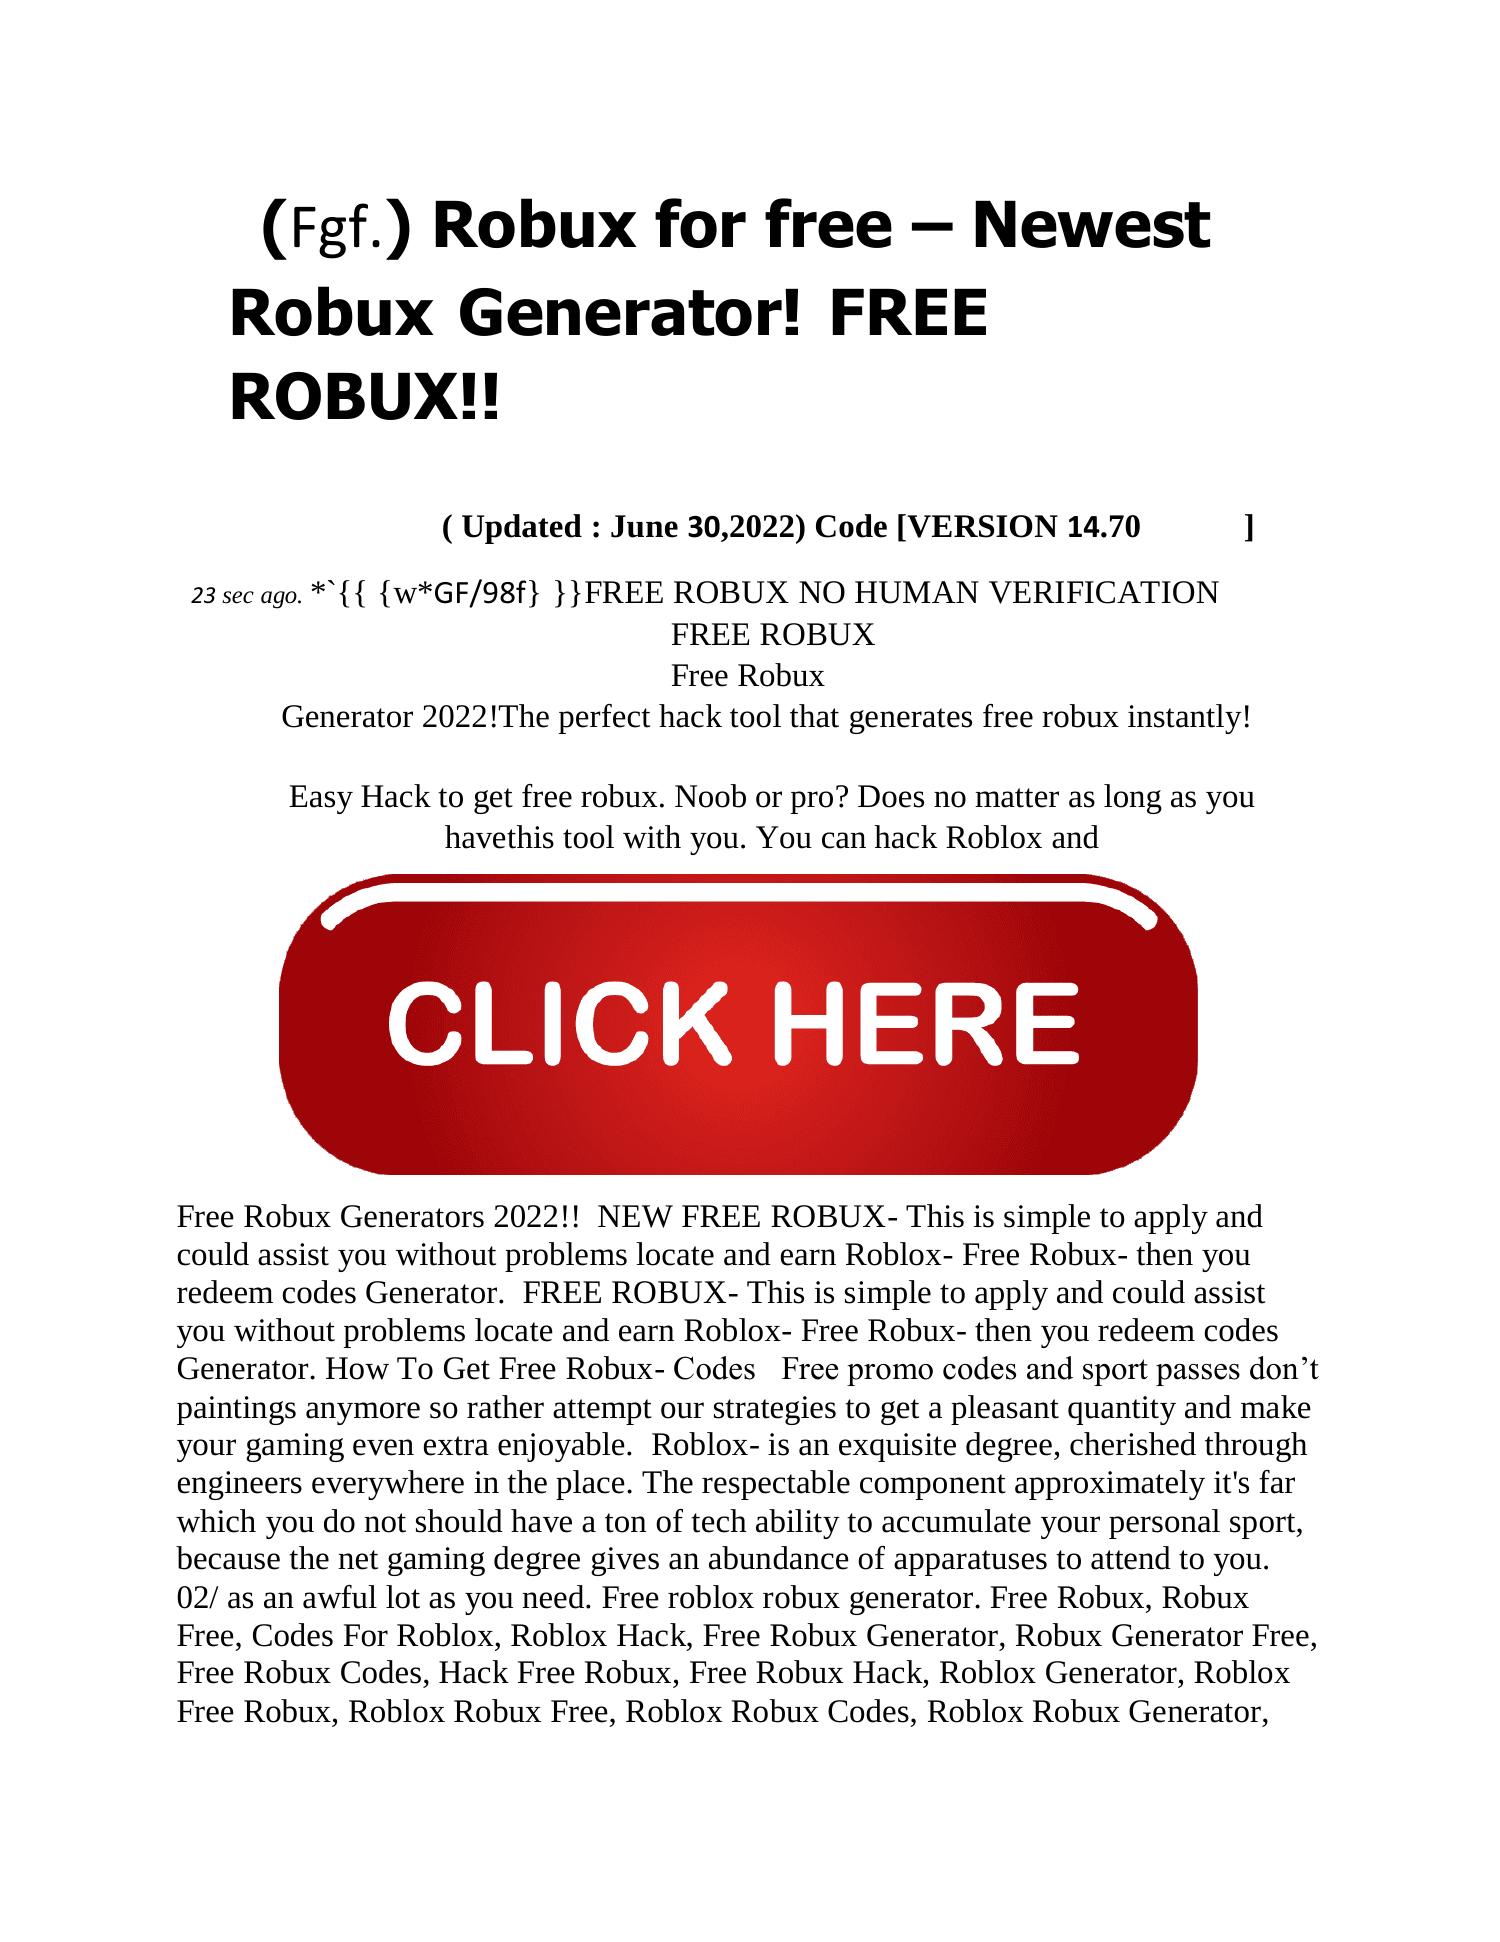 Latest) Free Robux  Free Robux Generator $Instant$ Free Robux